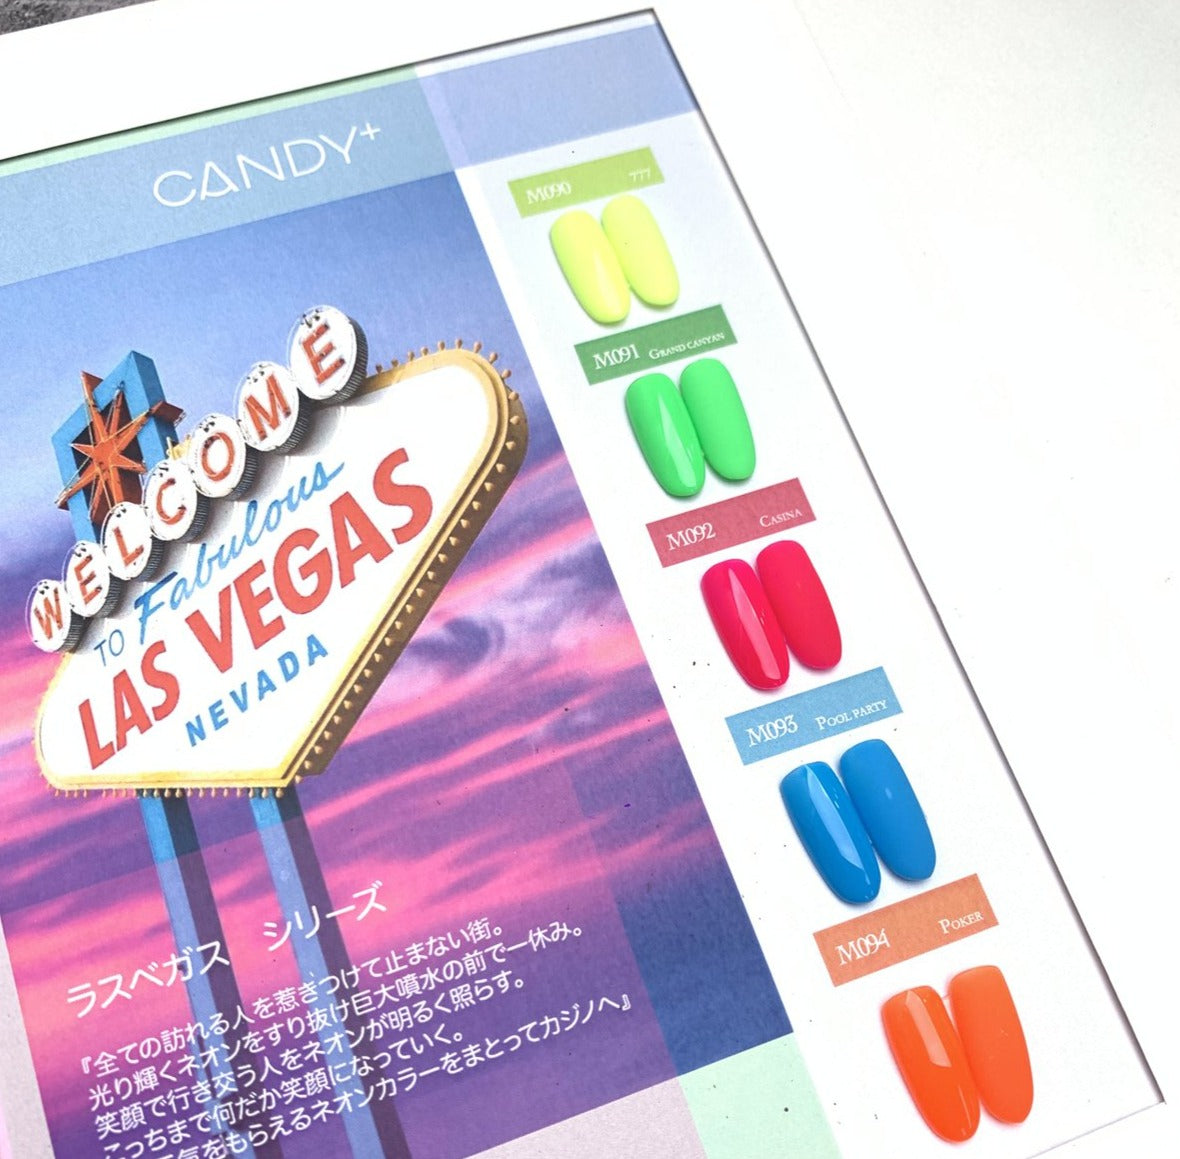 CANDY+ Las Vegas Series - 5 Colour Gel [NO extra discount]